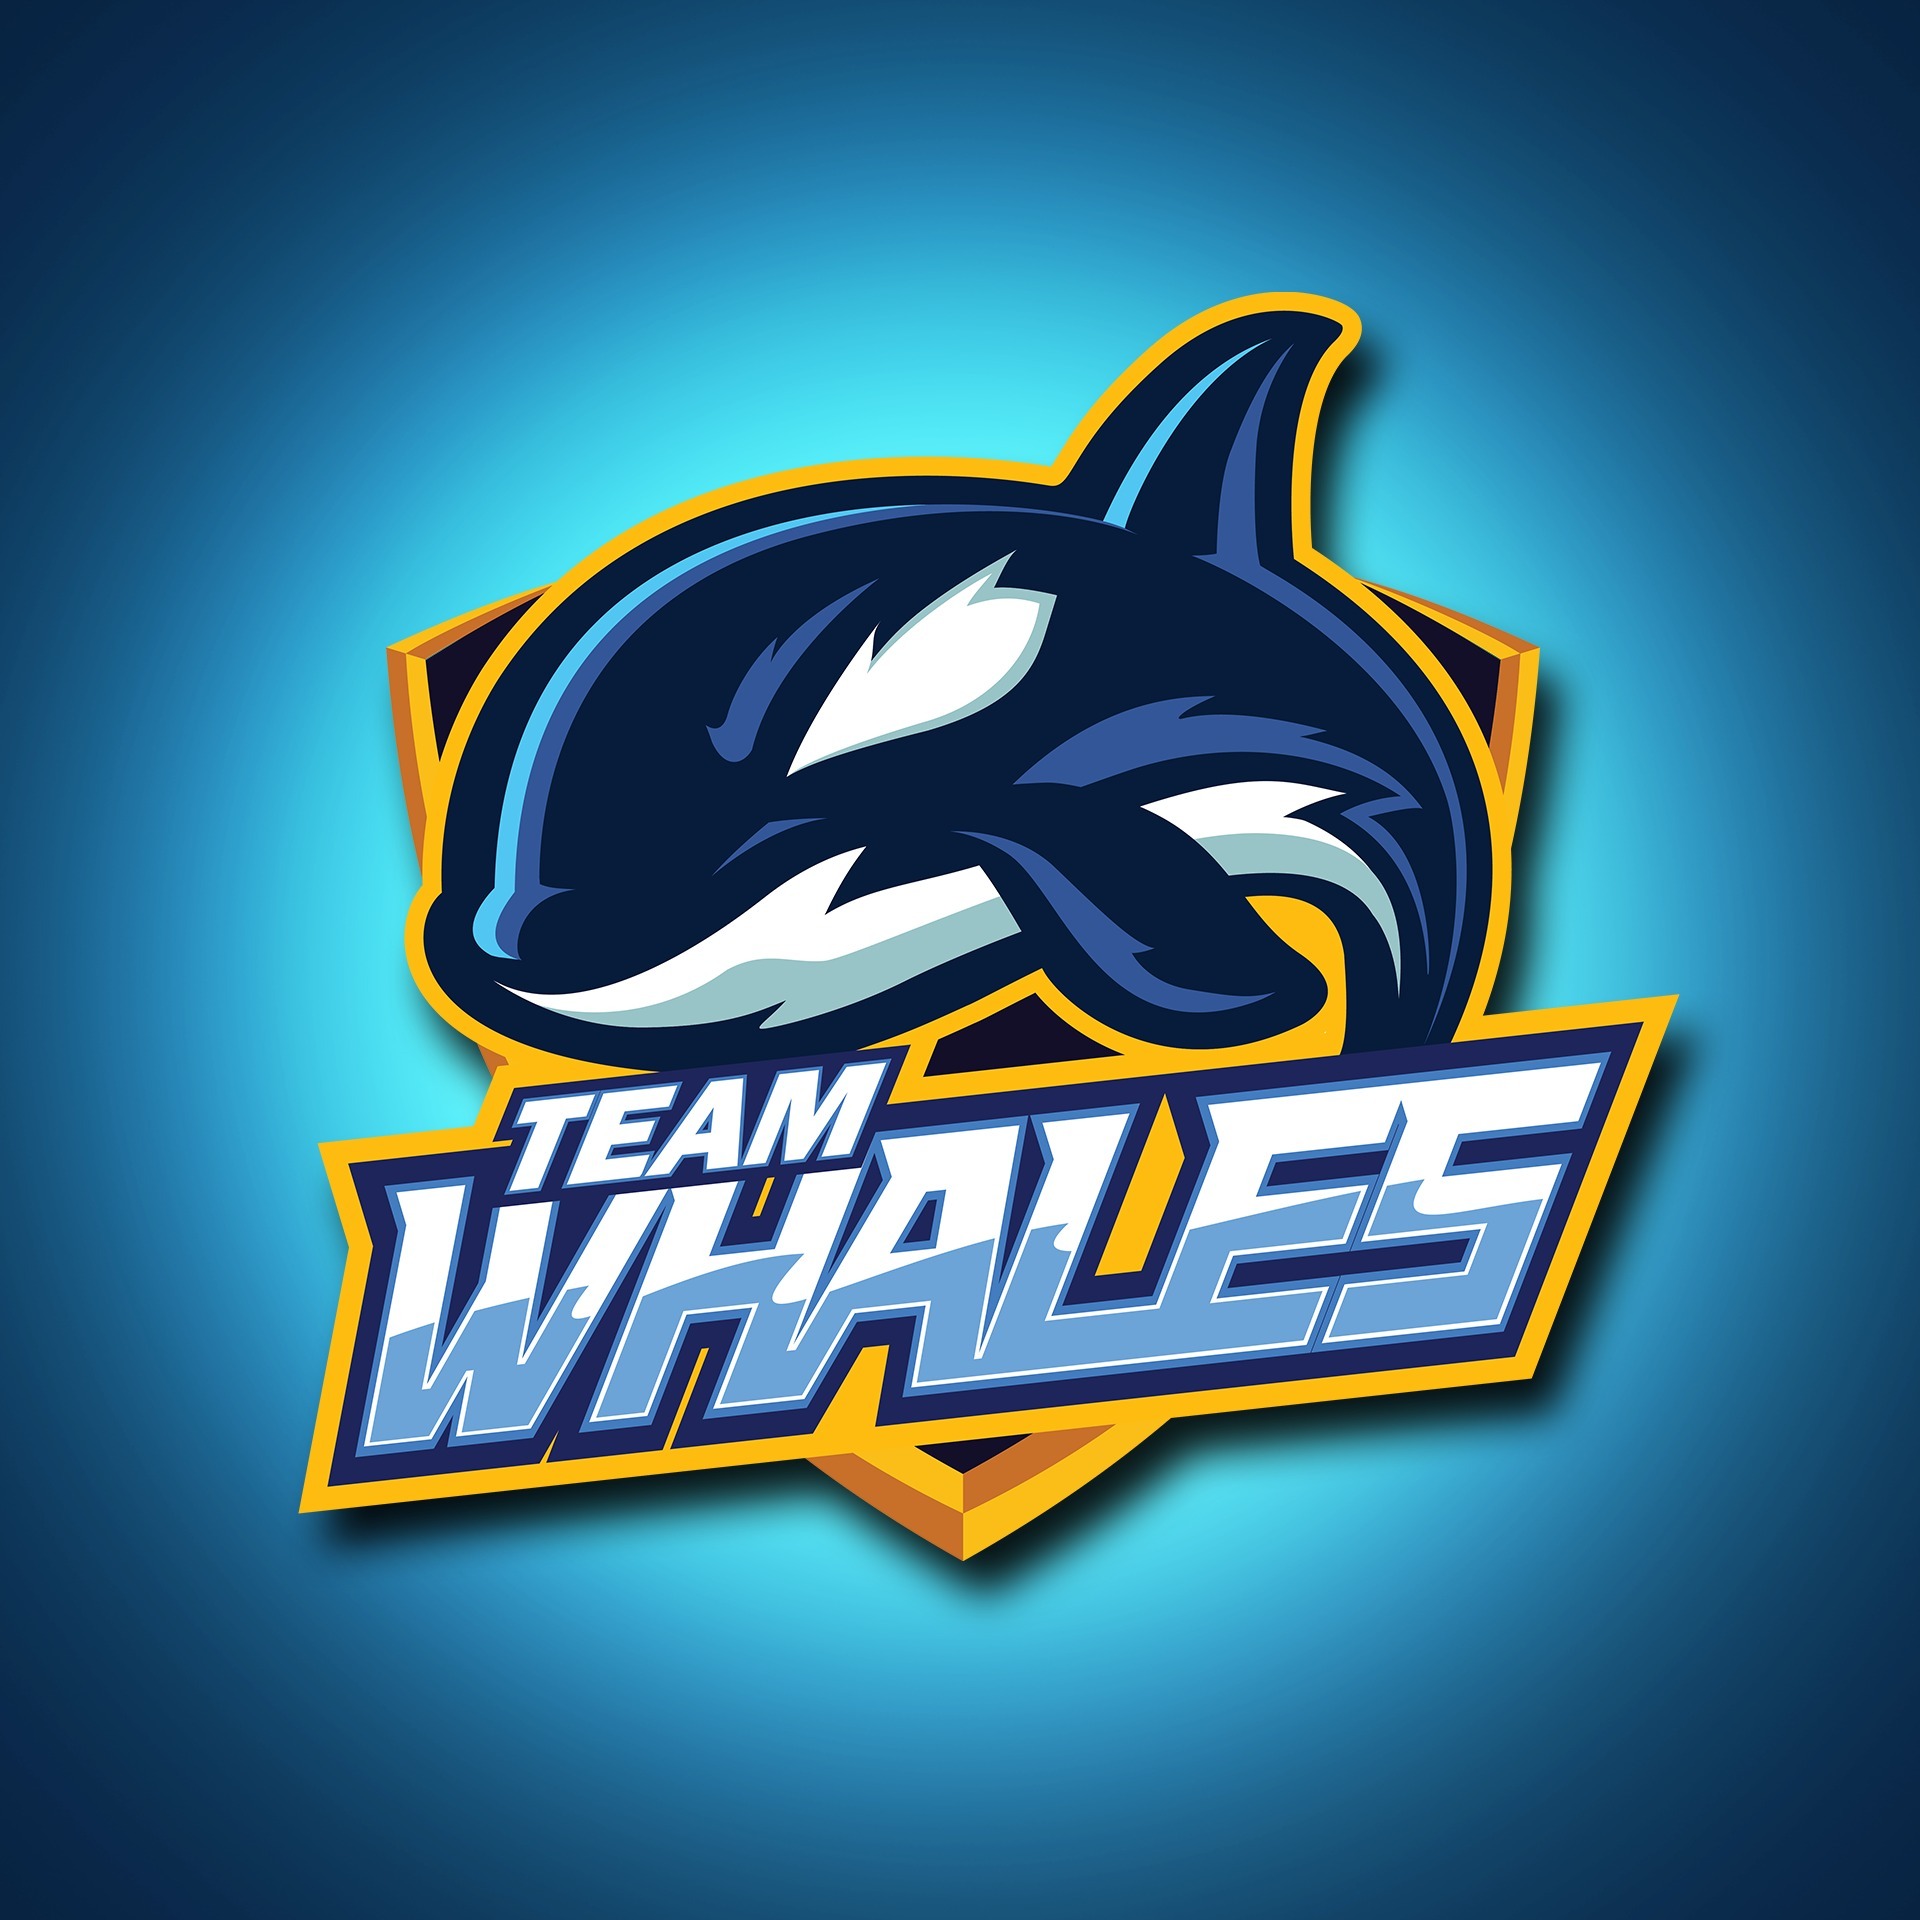 Team Whales mua lại Luxury Esports - Ảnh 1